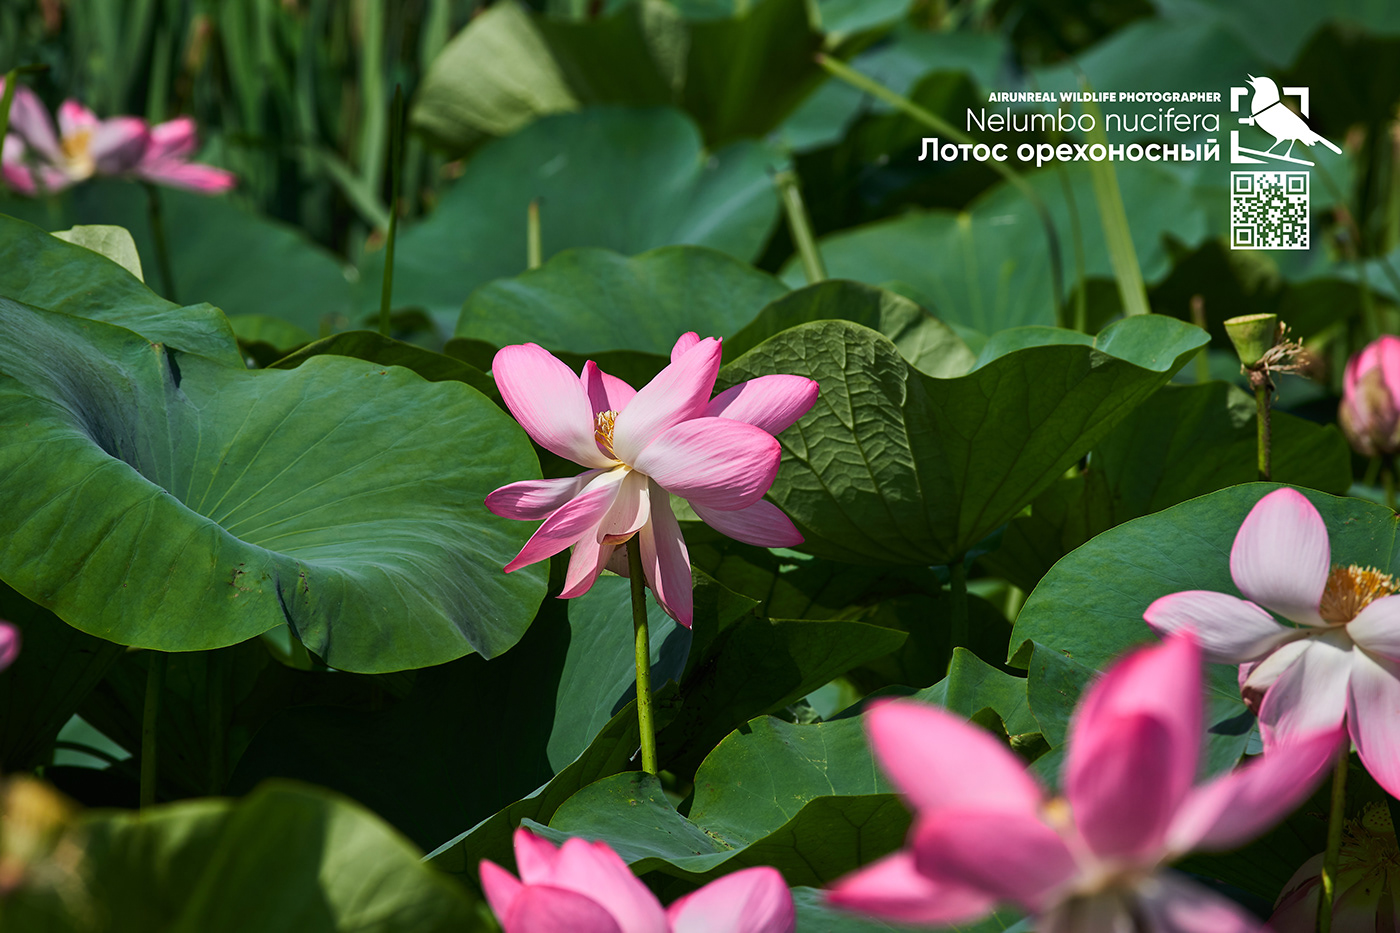 astrakhan flower Indian lotus Laxmi lotus Lotus Nelumbo nucifera Russia sacred lotus